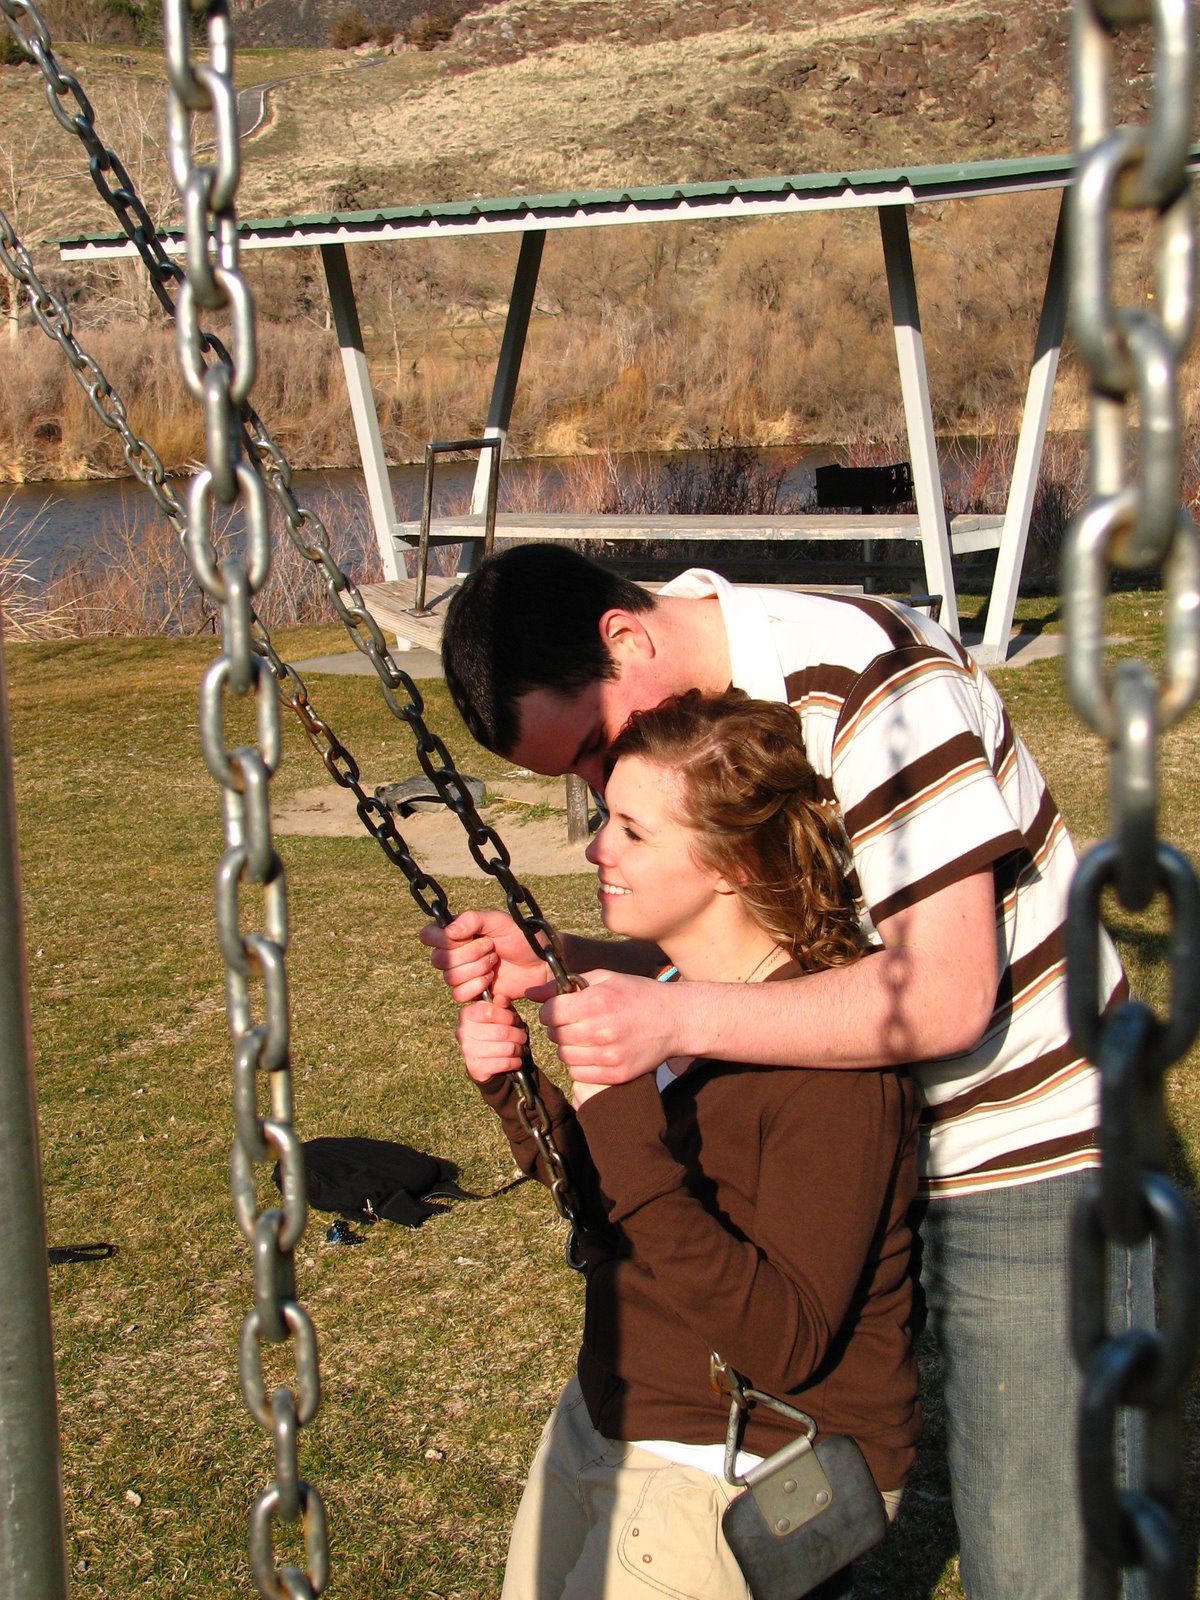 [Megan+and+Steve+on+swing.jpg]